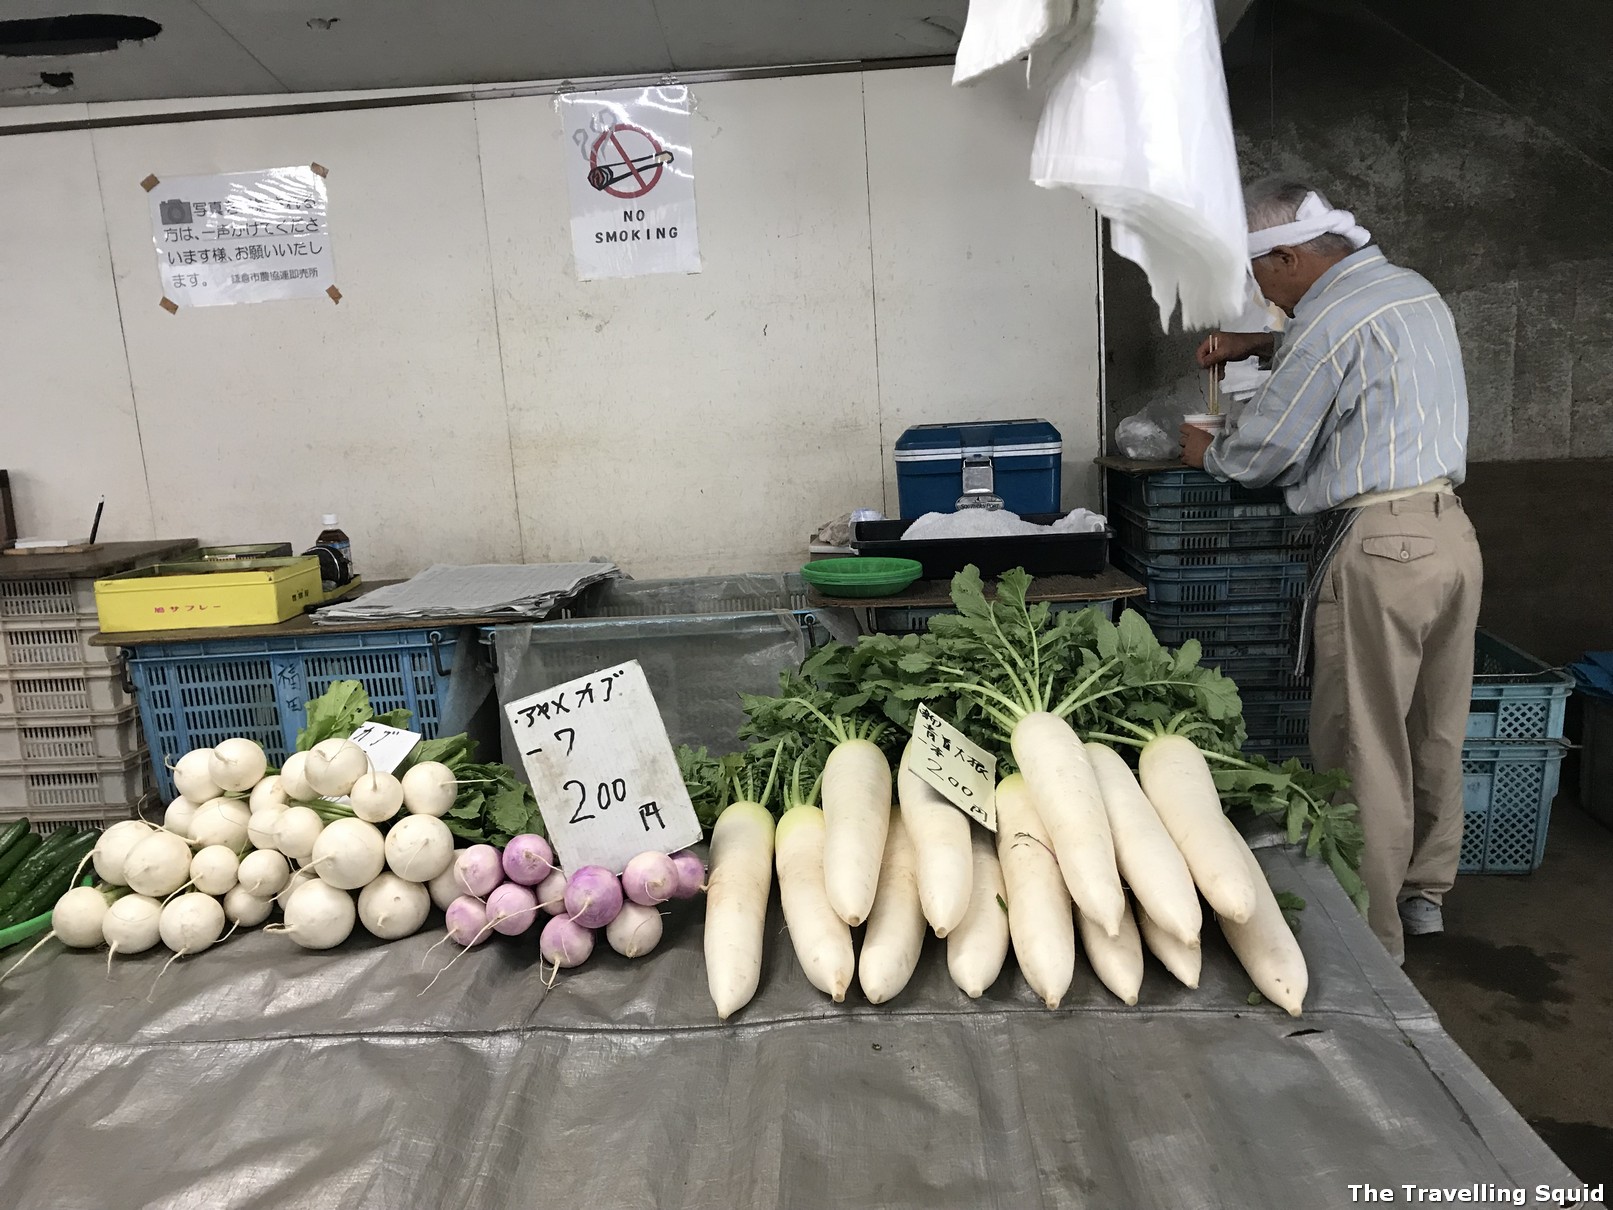 types of produce to buy in Kamakura